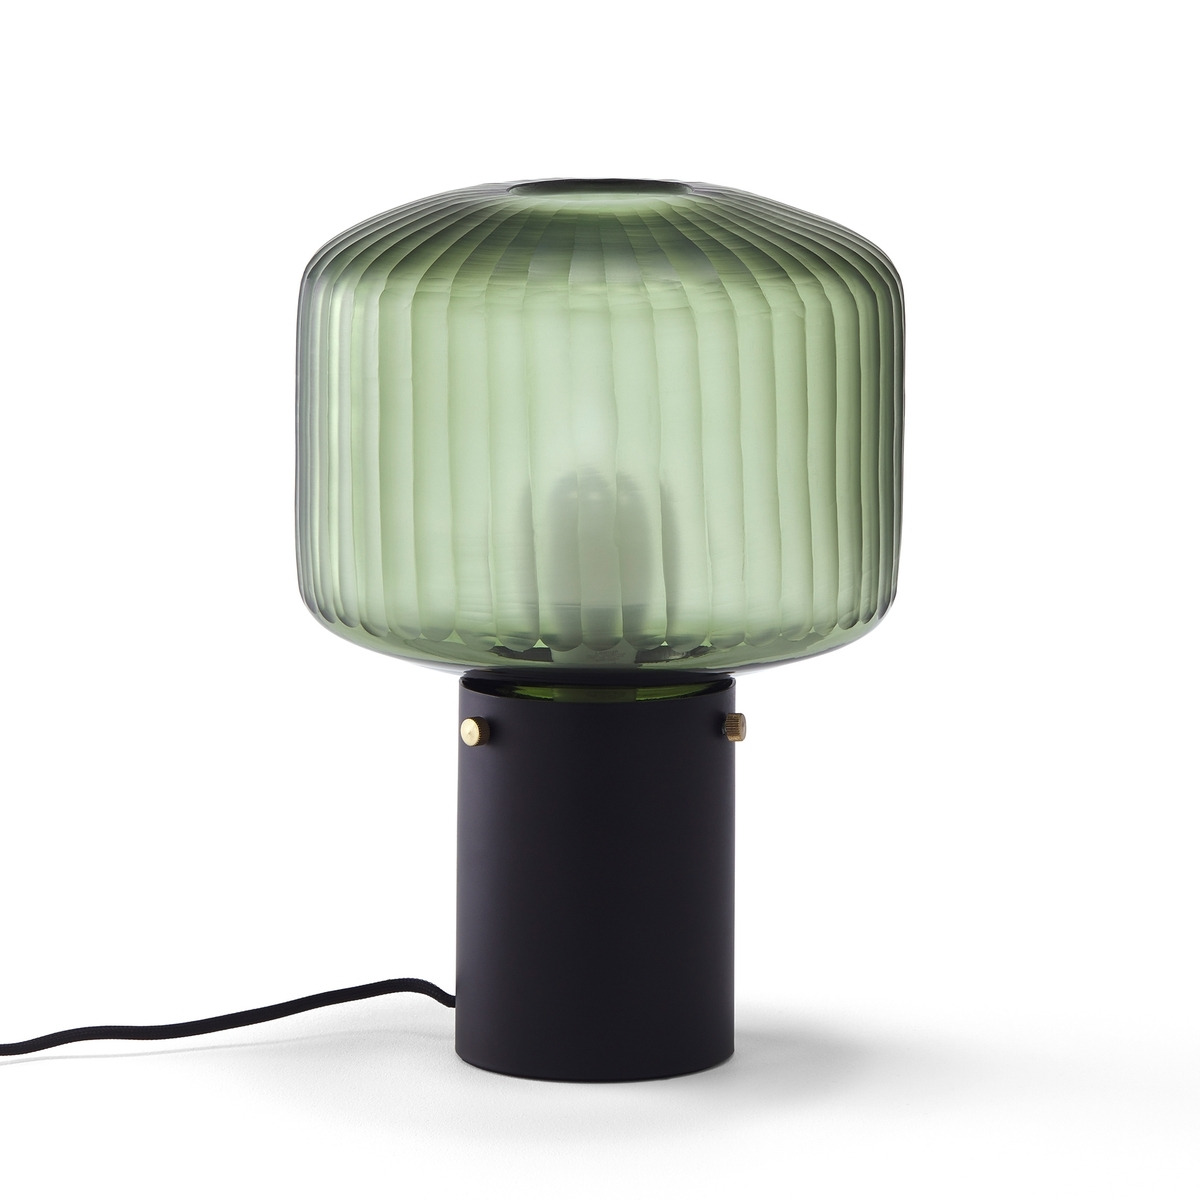 Kiwango Blown Tinted Glass Table Lamp - image 1